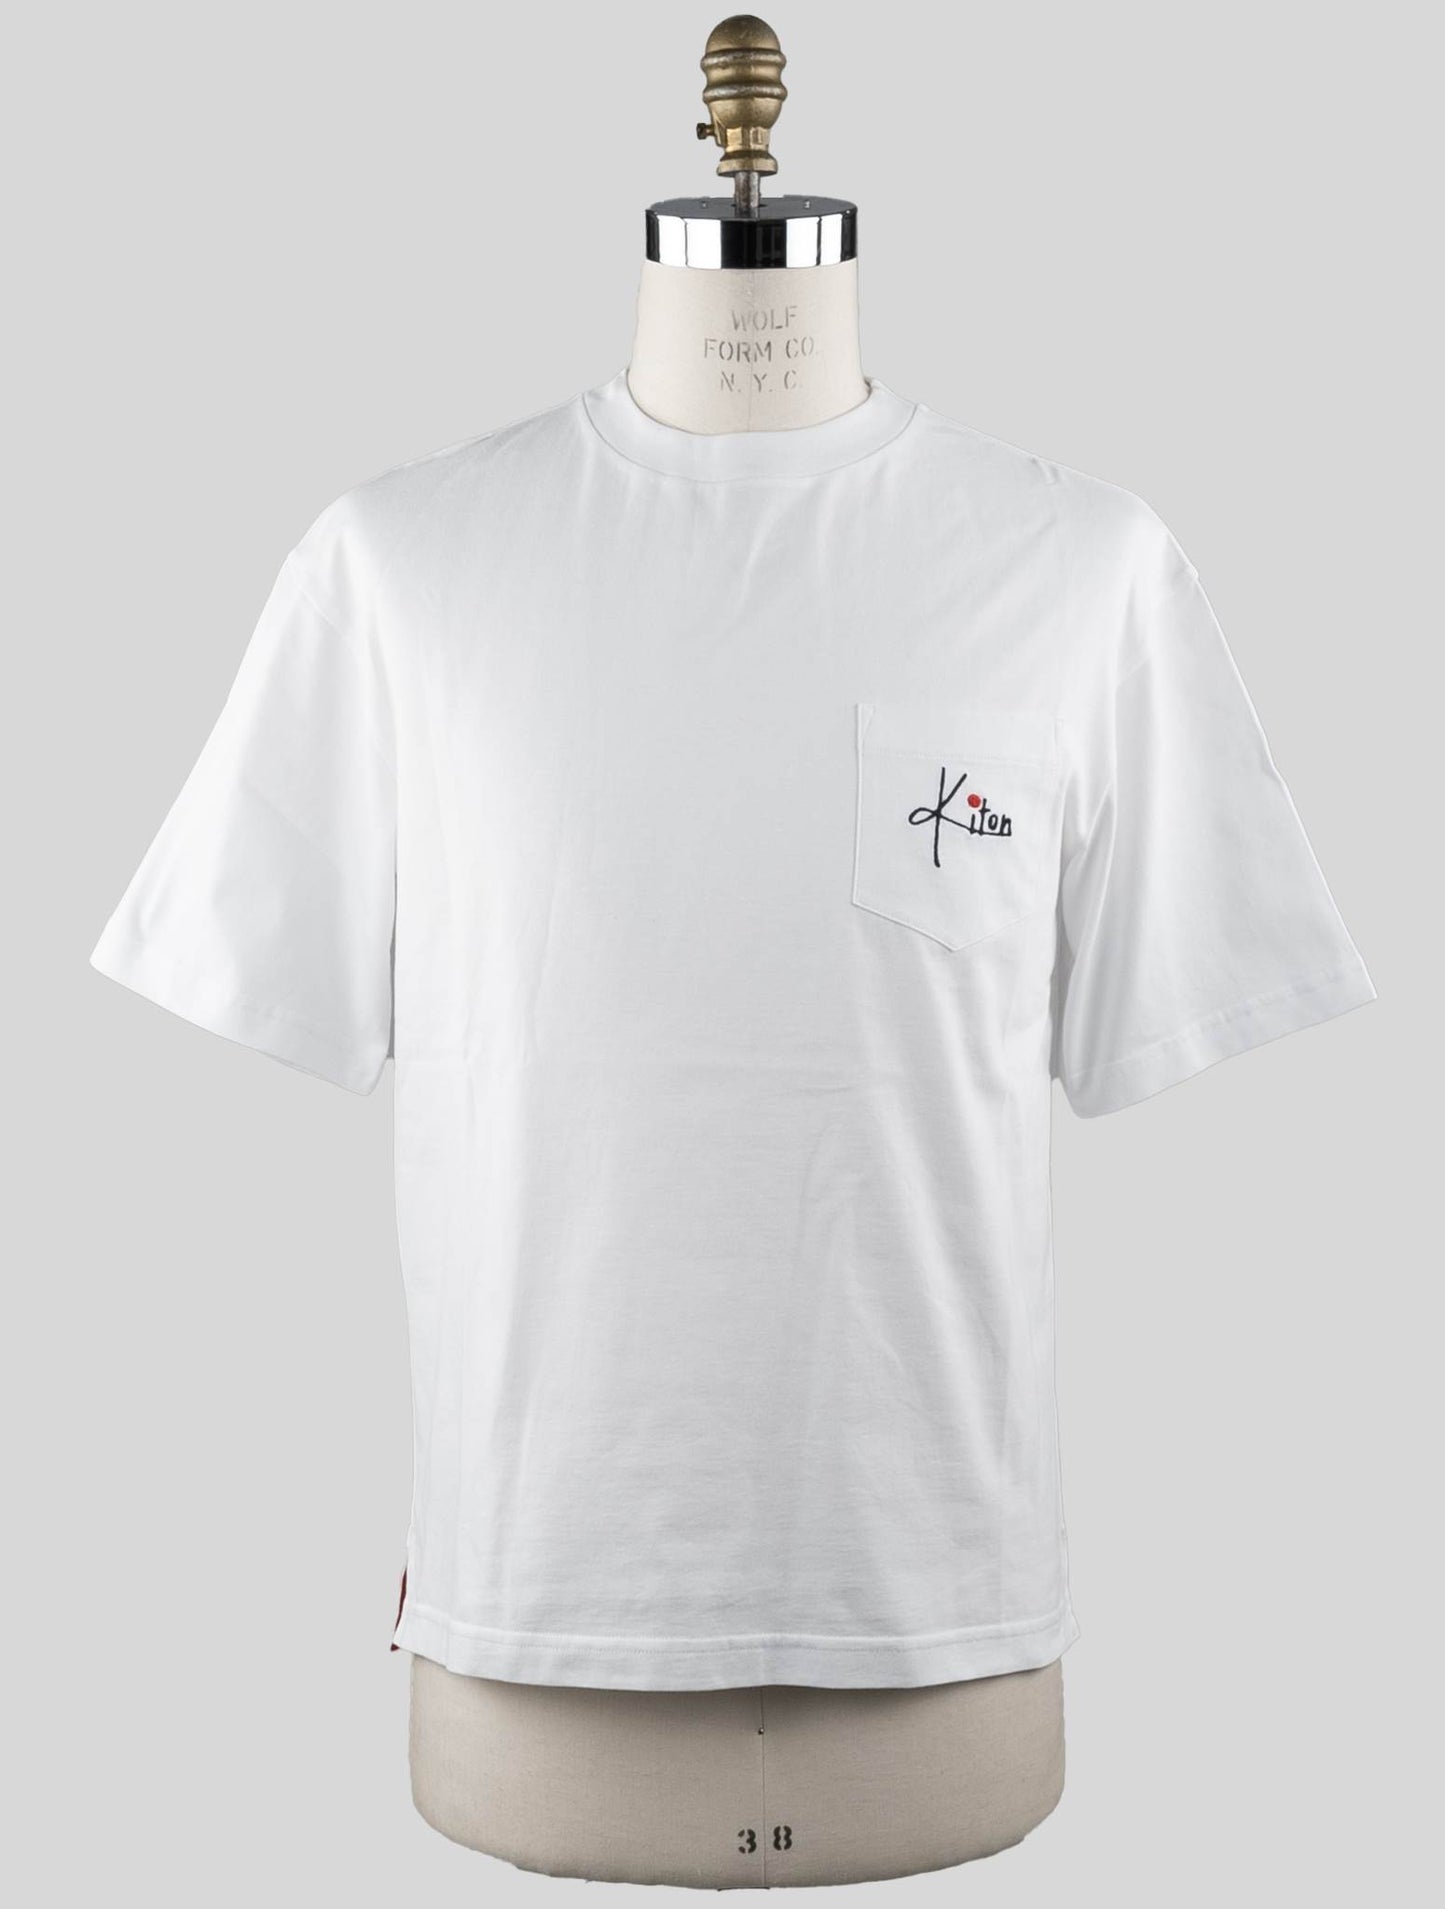 Kiton wit katoen T-shirt